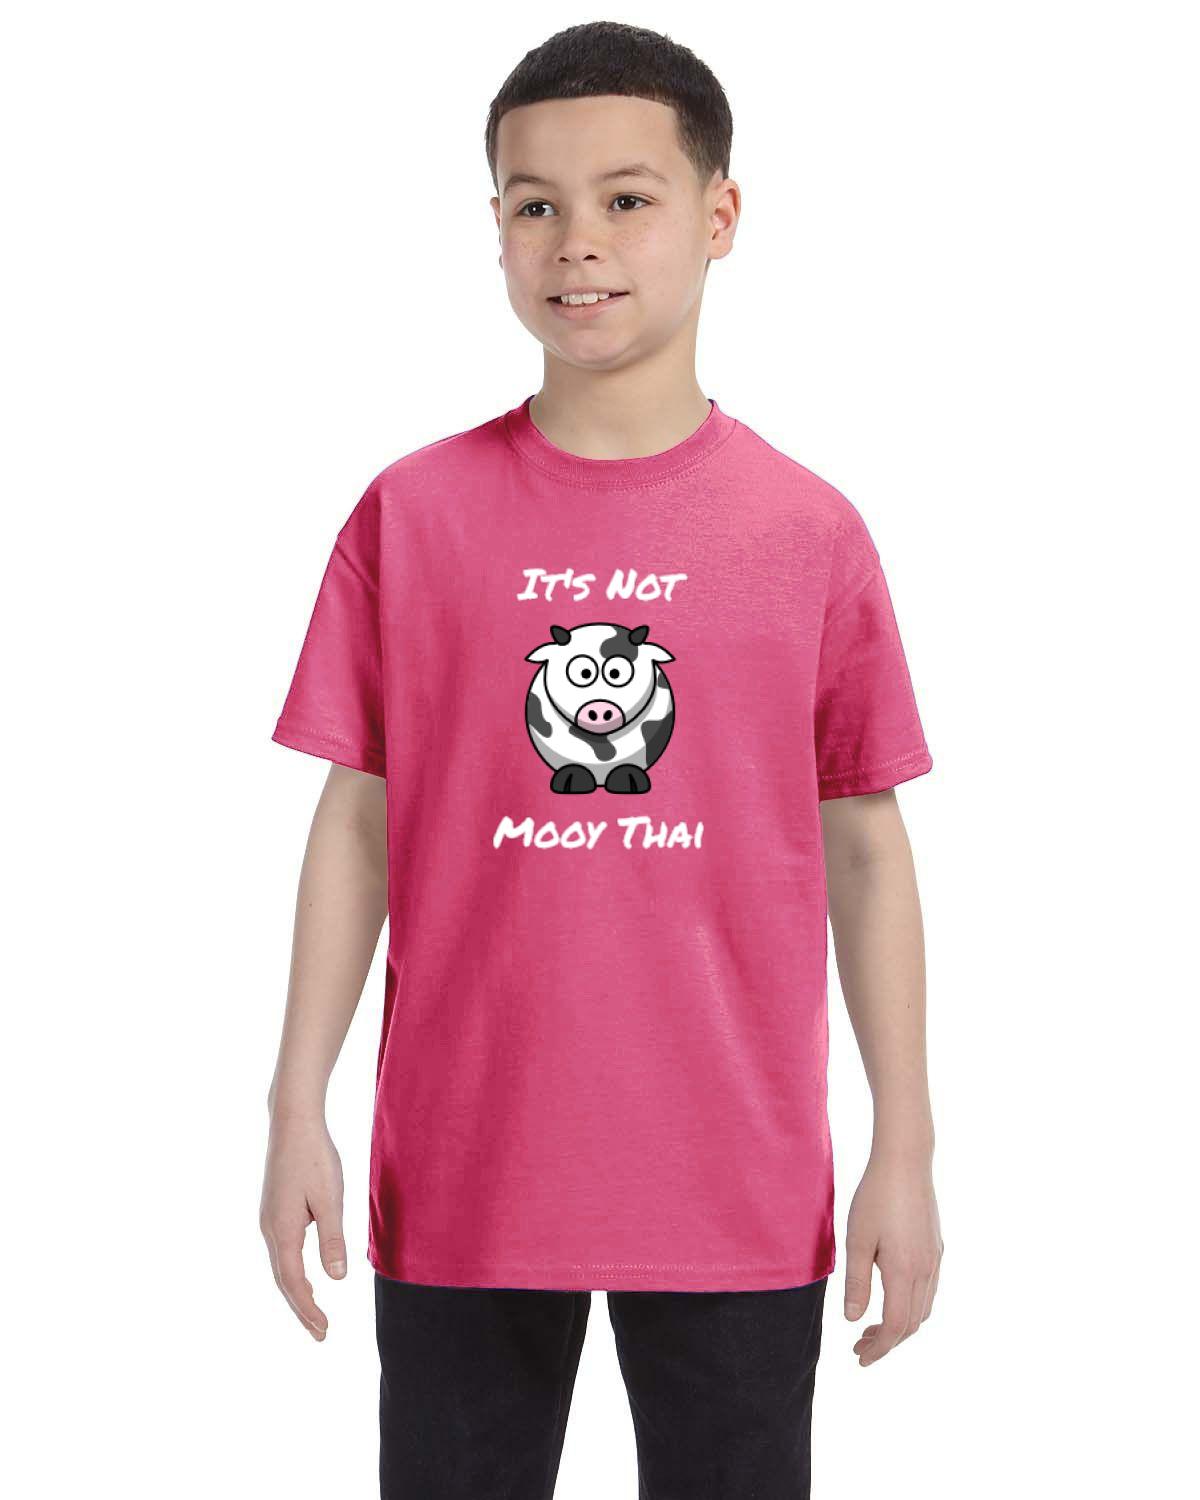 Not Mooy Thai Kids T-Shirt